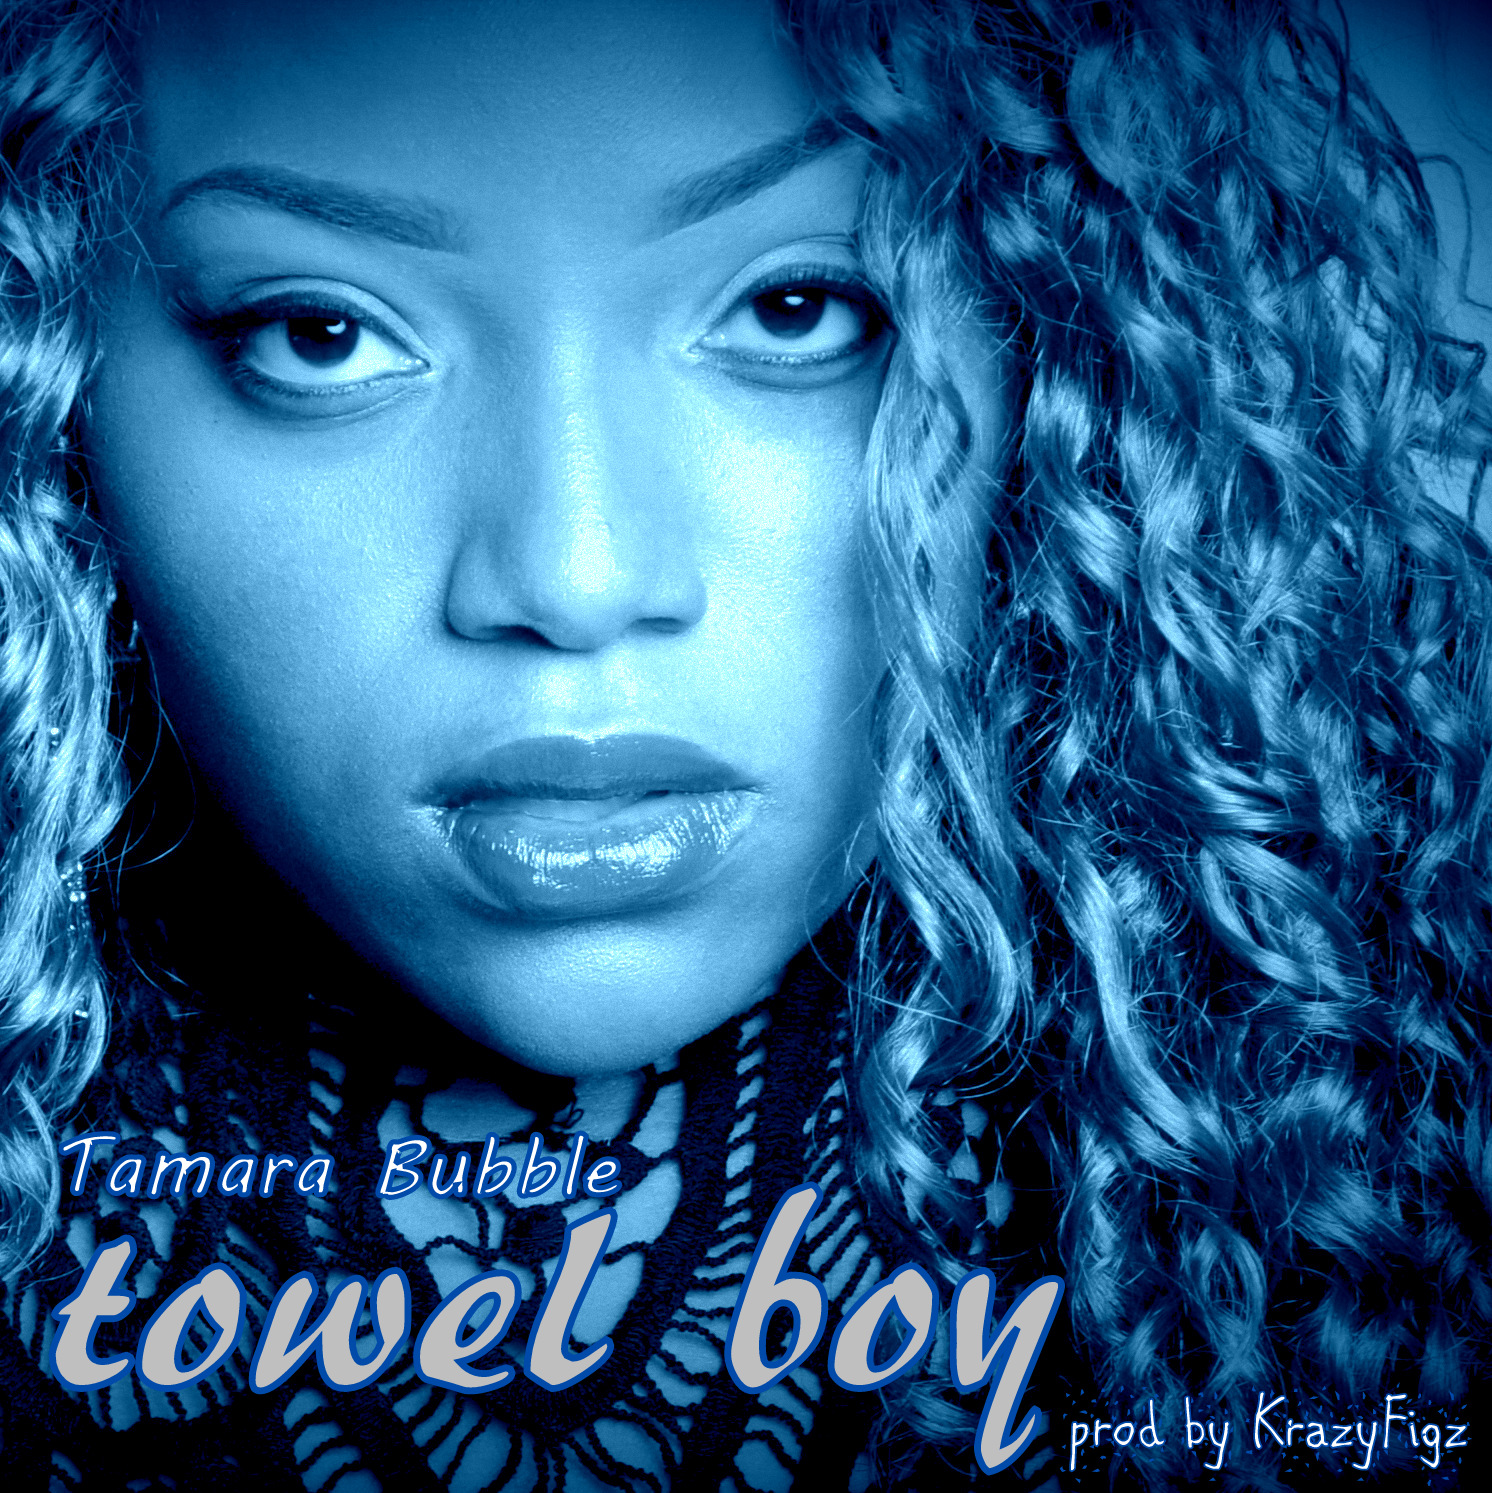 Art for Towel Boy by Tamara Bubble